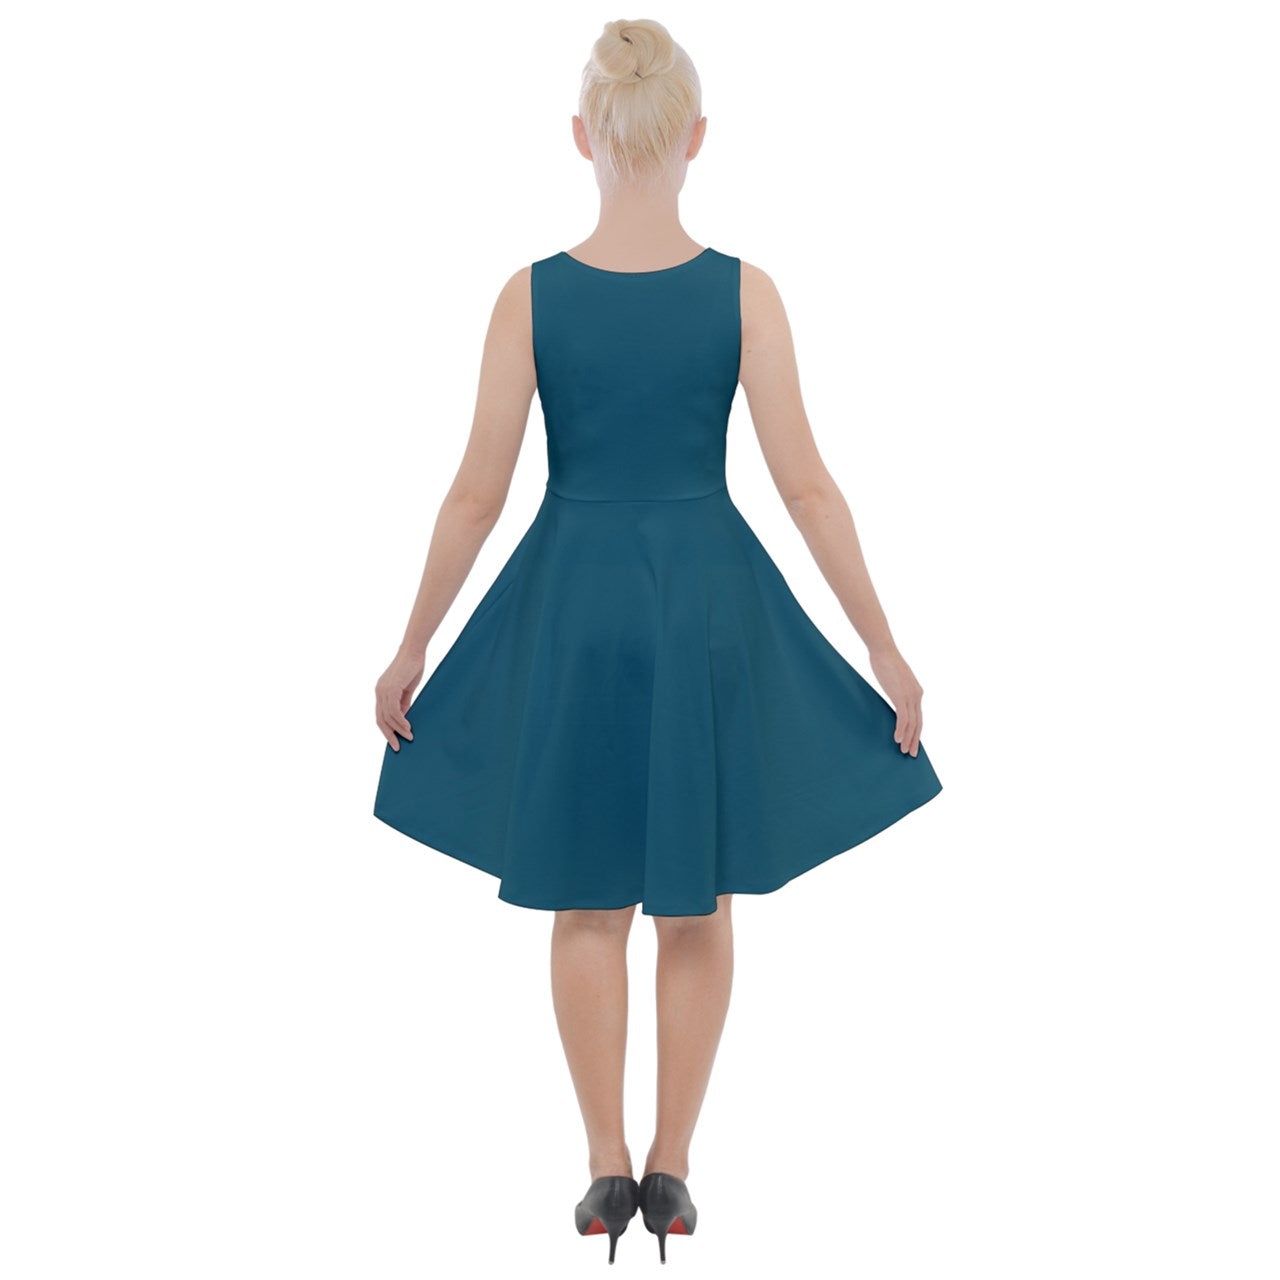 Pattern 262 Knee-Length Skater Dress with Pockets